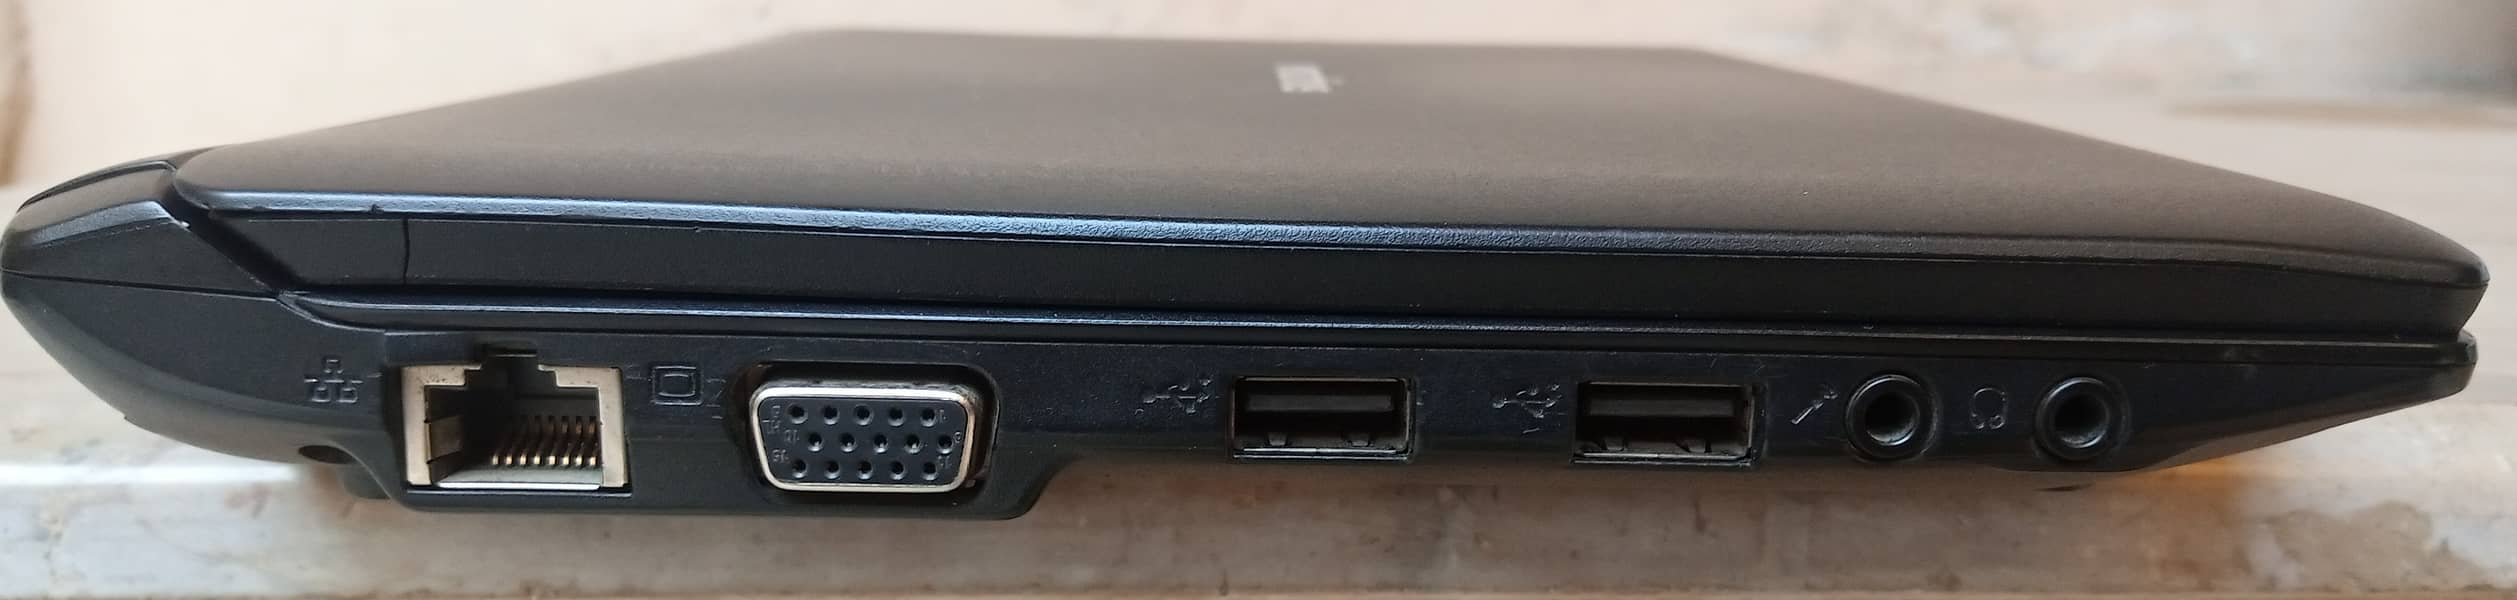 Acer Emachine em350 Laptop - Atom N450 - 1 GB Ram - 160 GB Rom 3